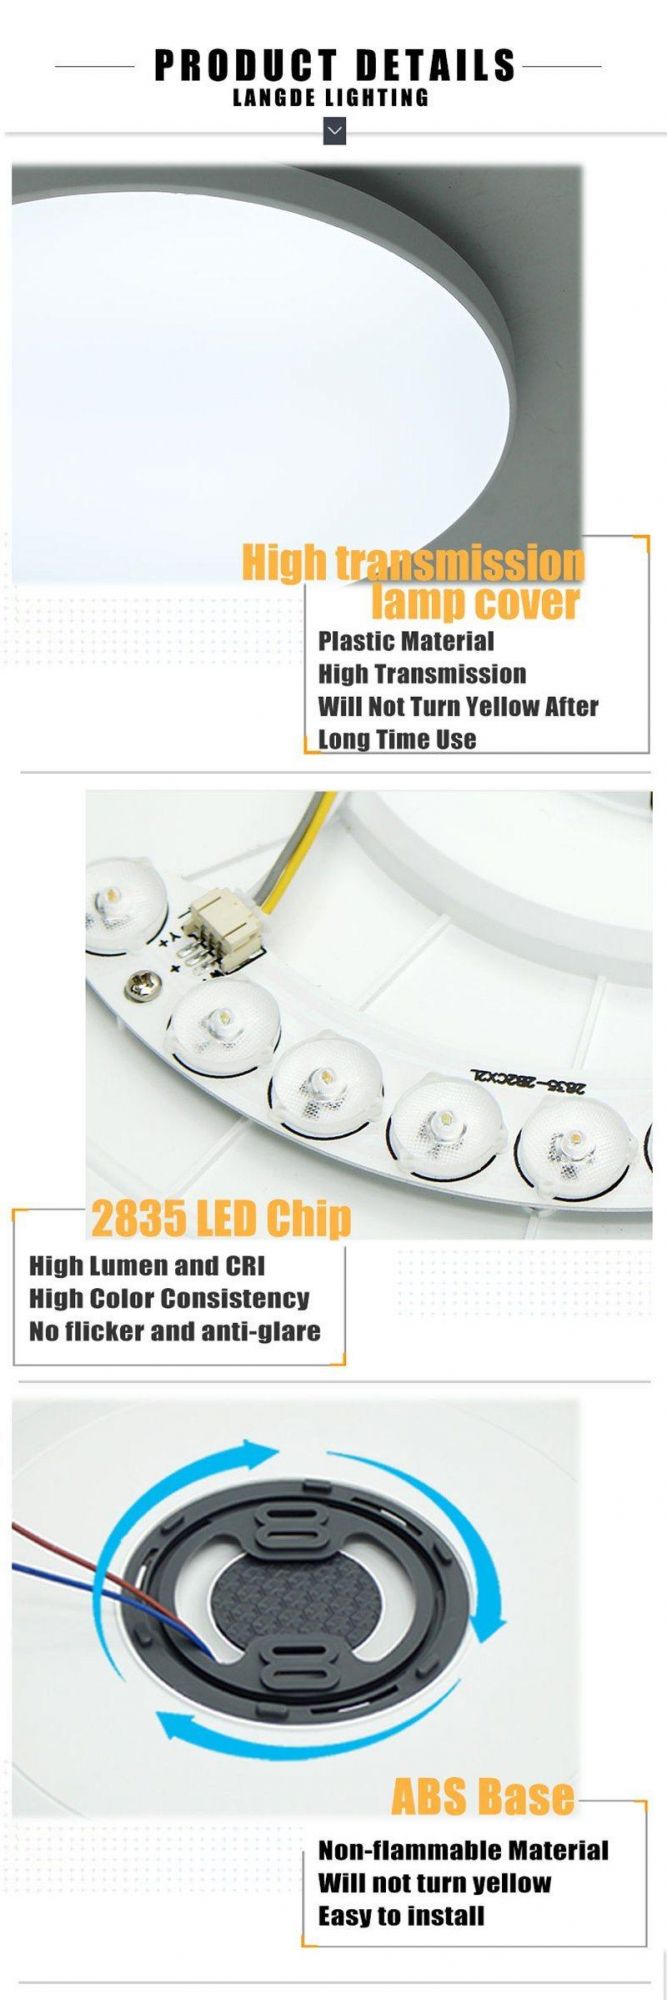 Langde Ultra Thin 5cm Bathroom Kitchen Balcony Ceiling Lamp Fixture Plastic Cover LED Tri Proof Light Ldp4403